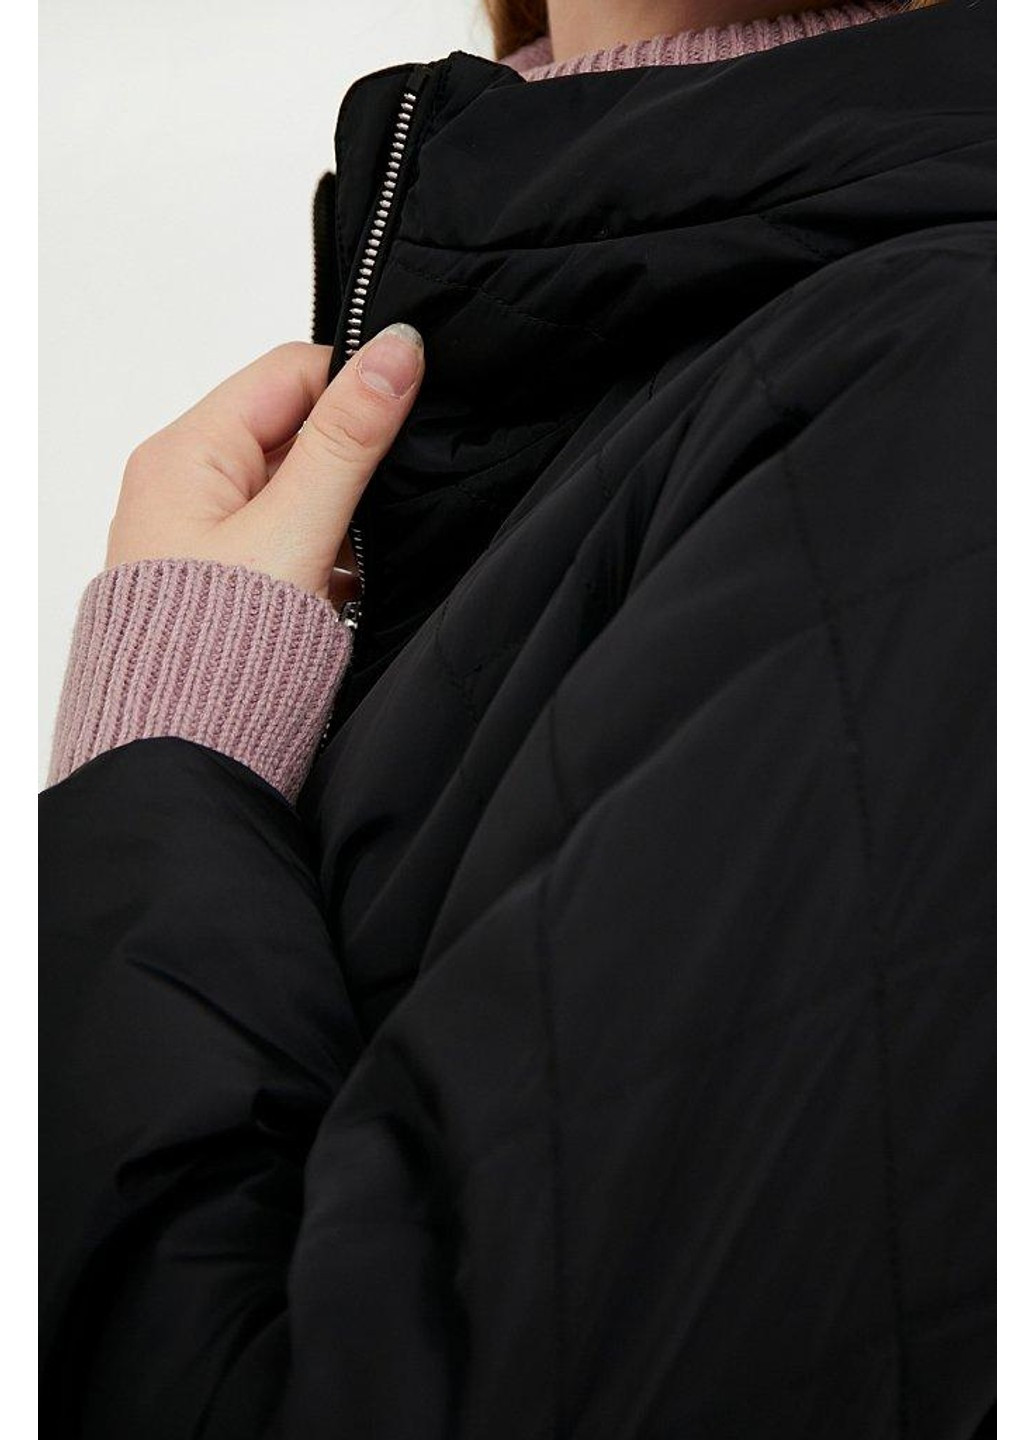 Черная демисезонная куртка a20-11007-200 Finn Flare